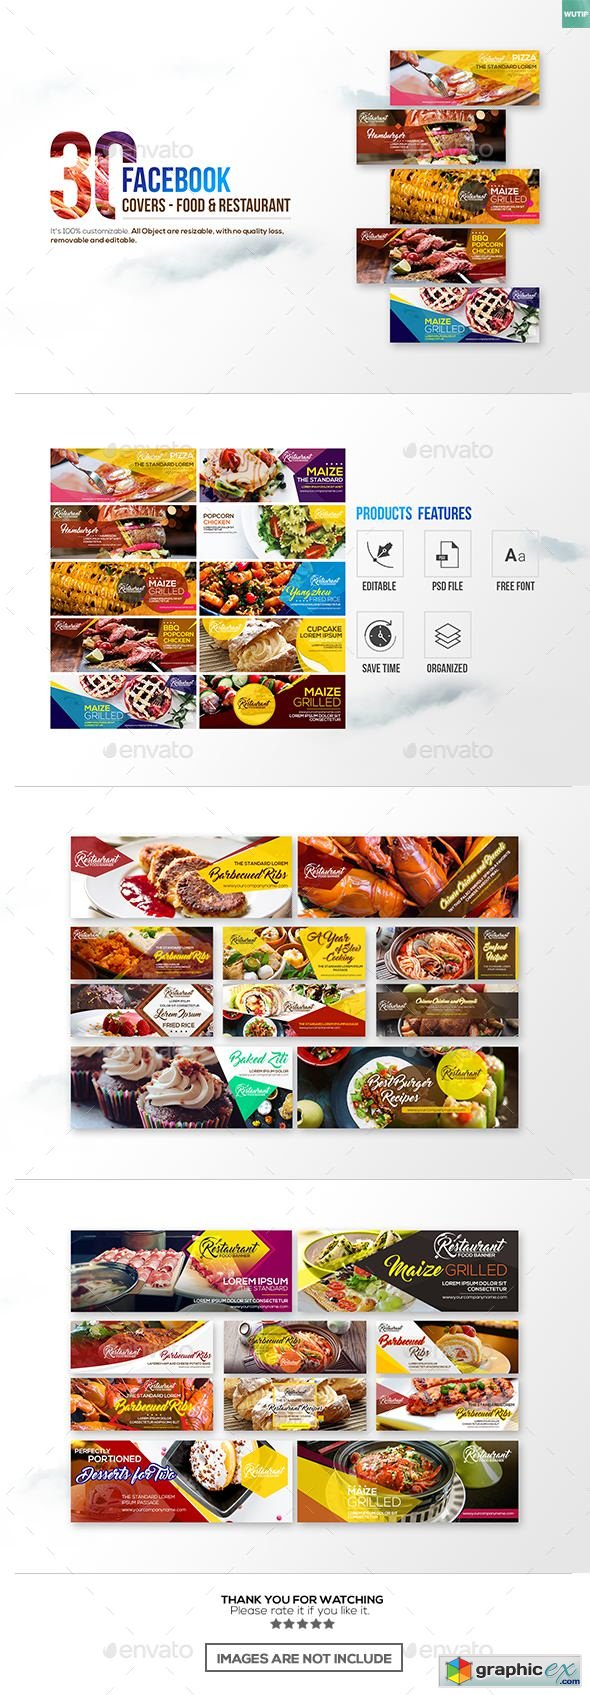 30 Food & Restaurant Facebook Covers